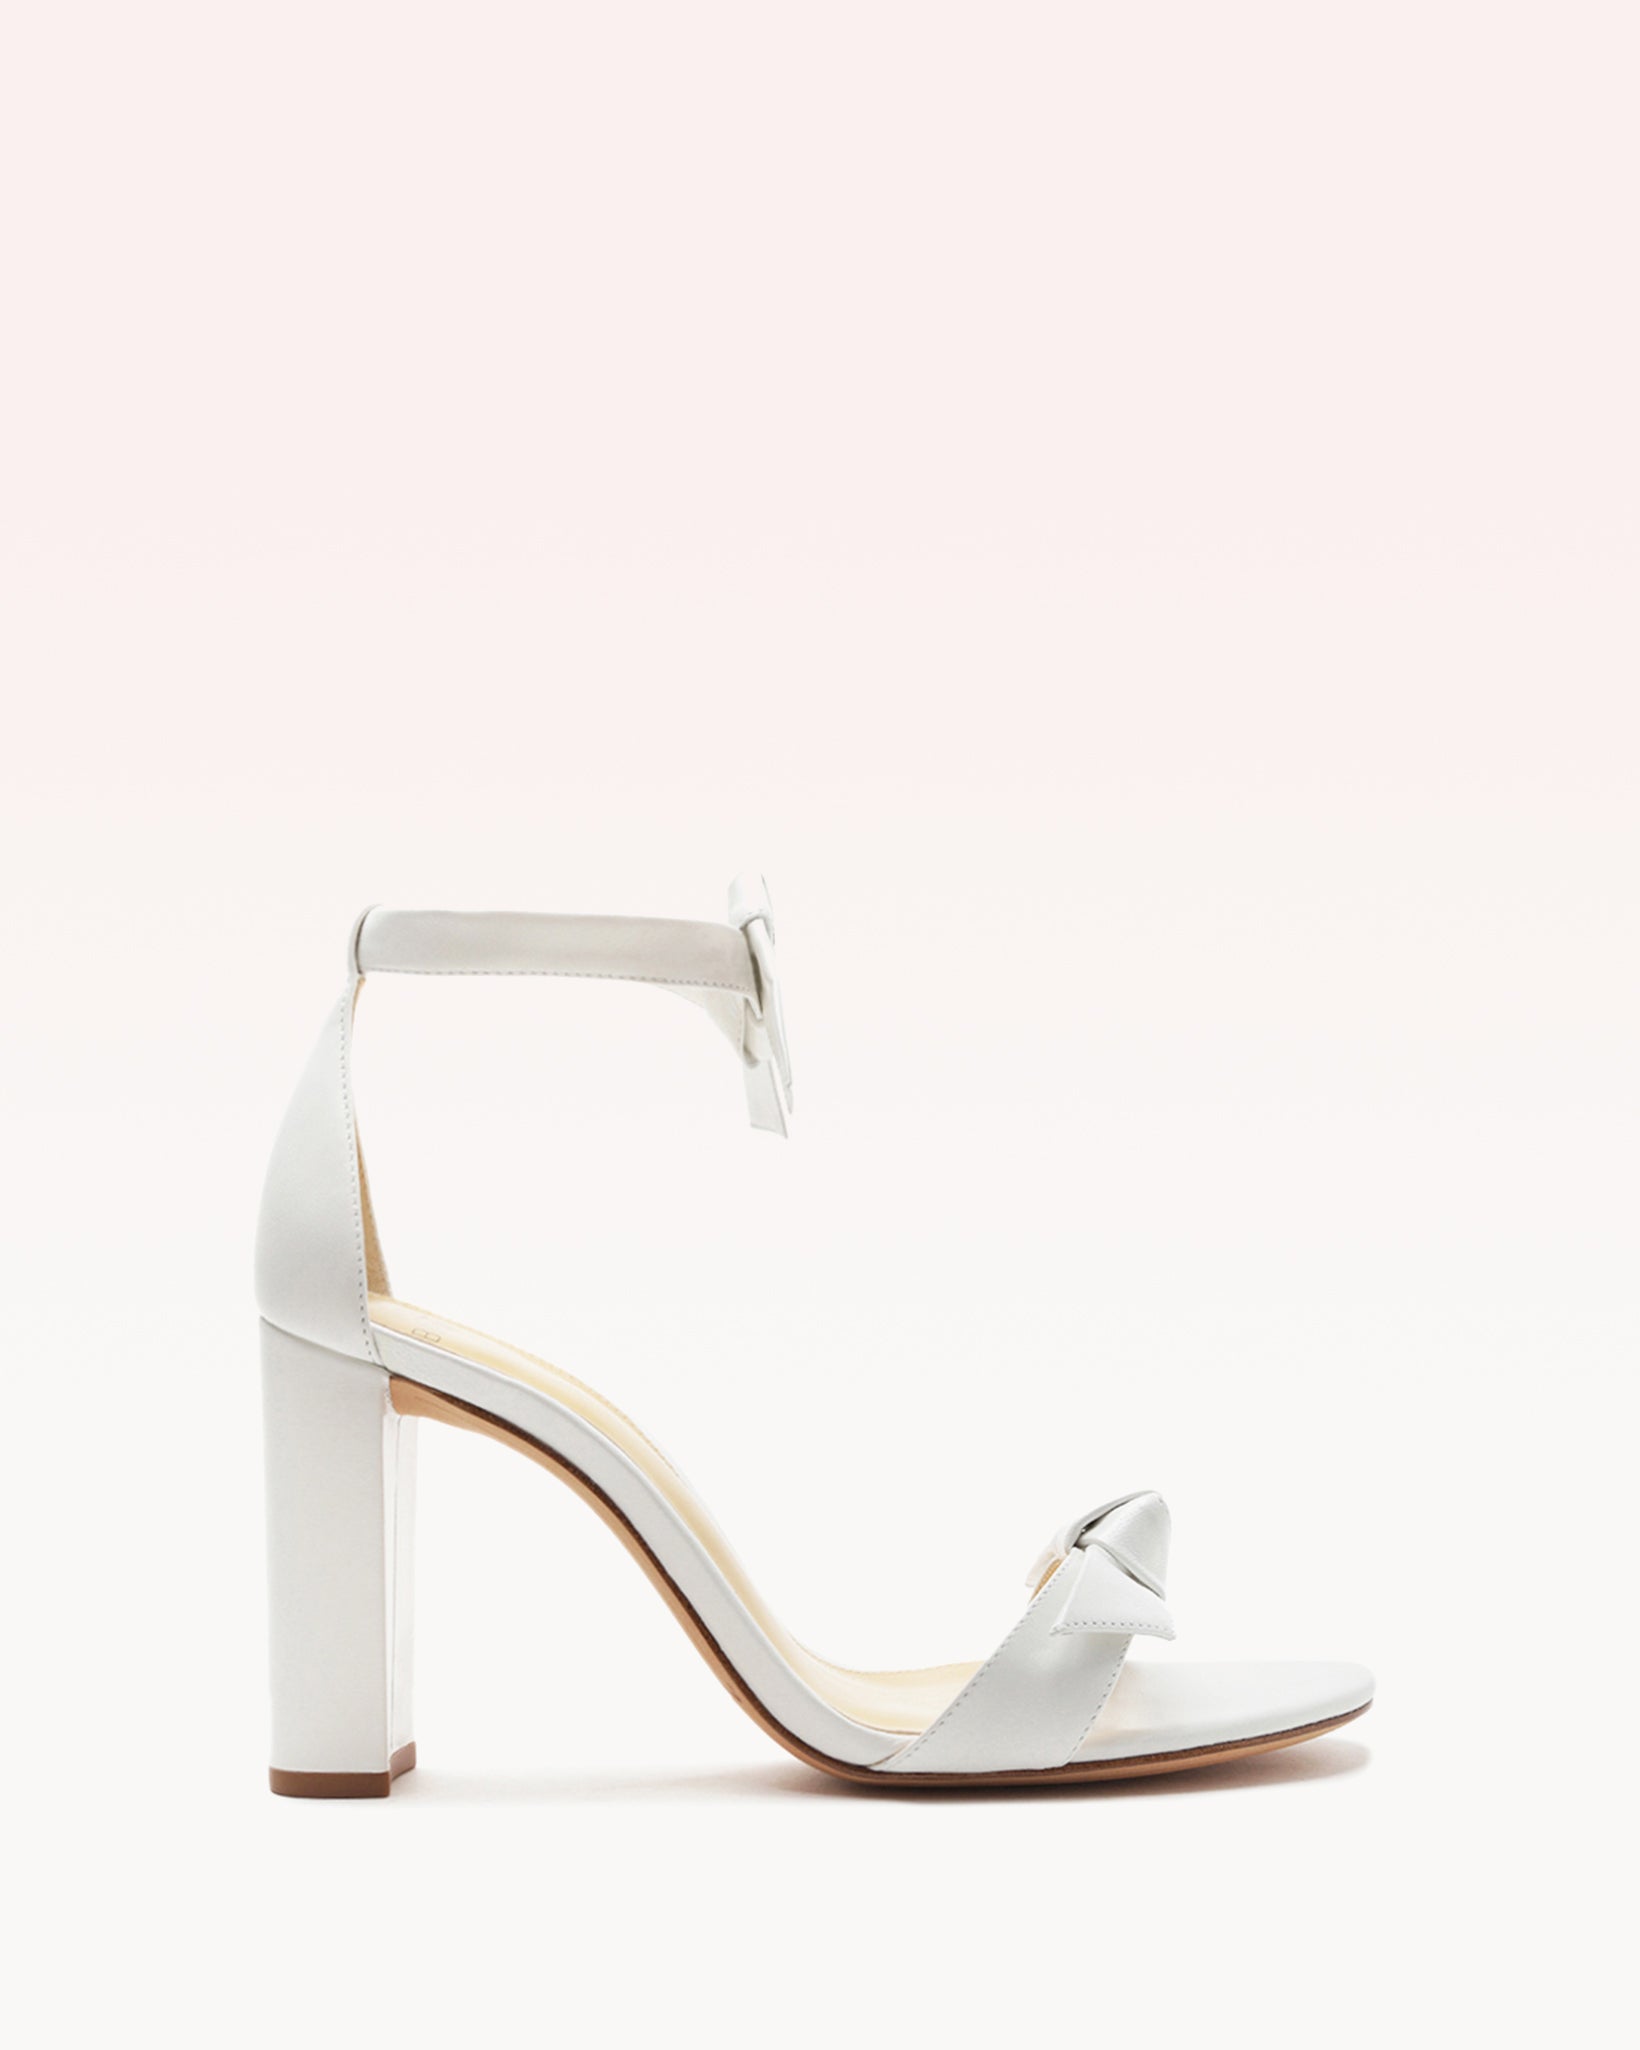 Clarita Block 90 Sandal in White Leather | Alexandre Birman